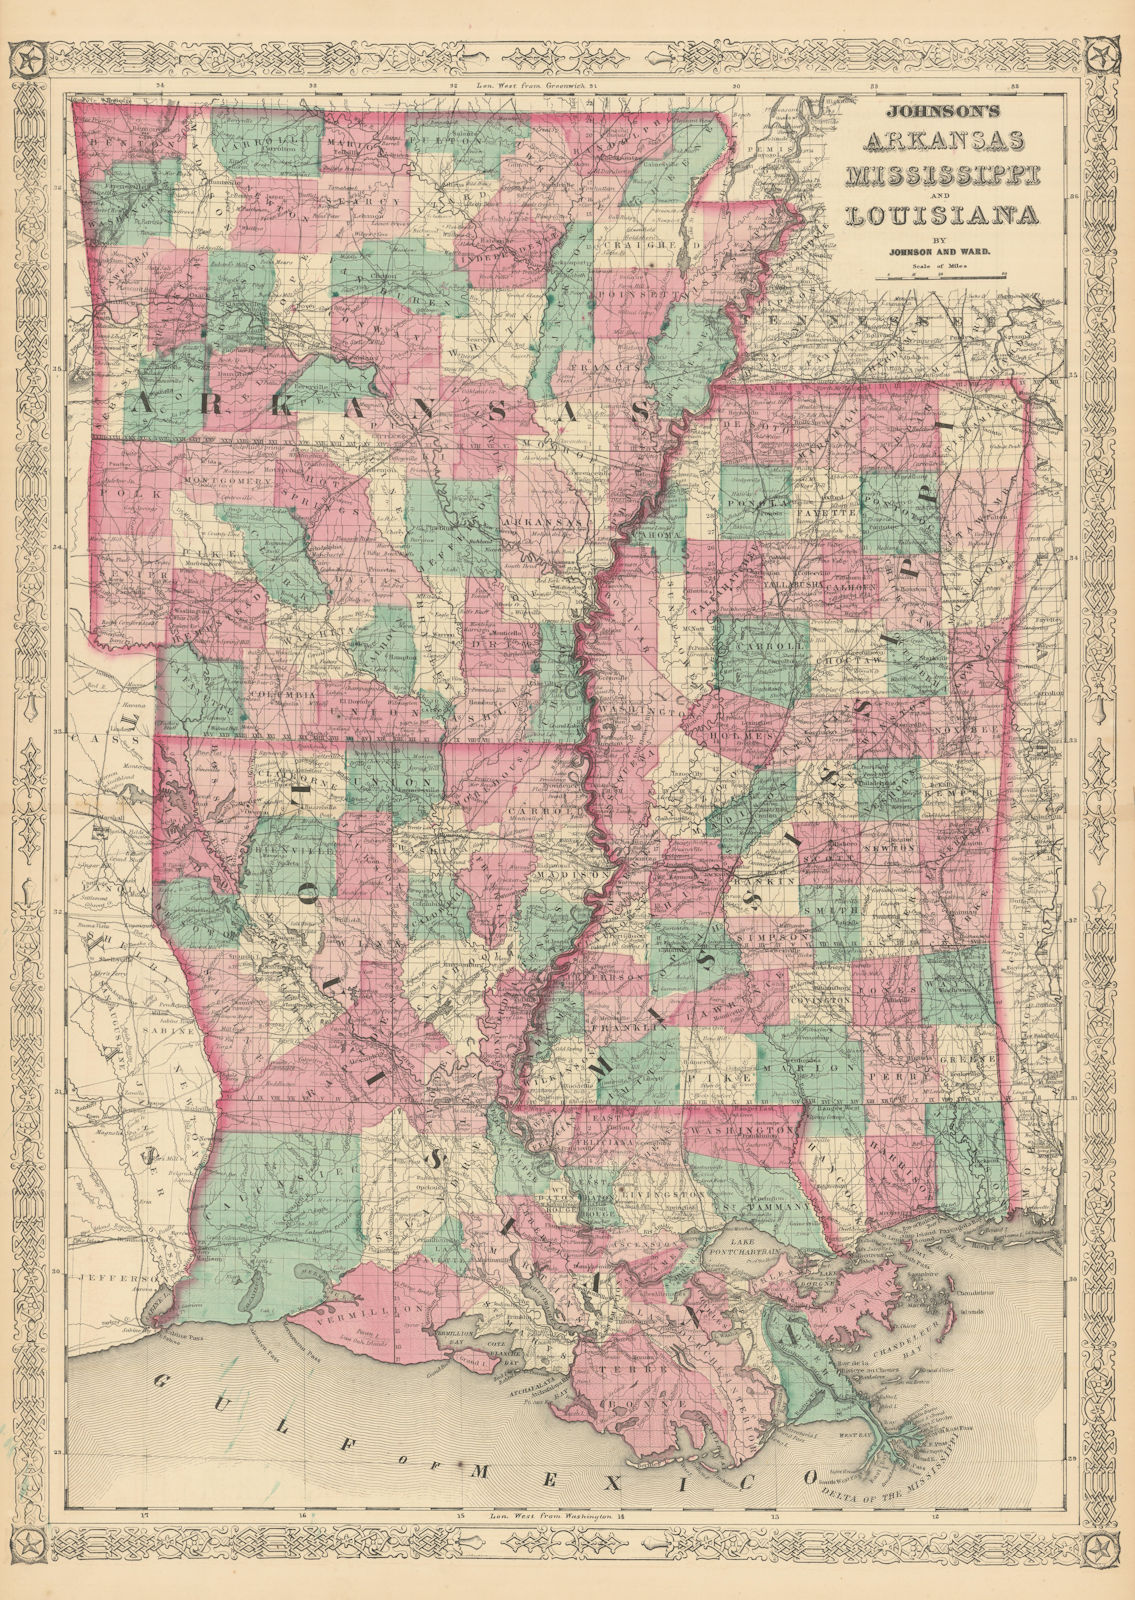 Johnson's Arkansas, Mississippi & Louisiana showing counties/parishes 1866 map